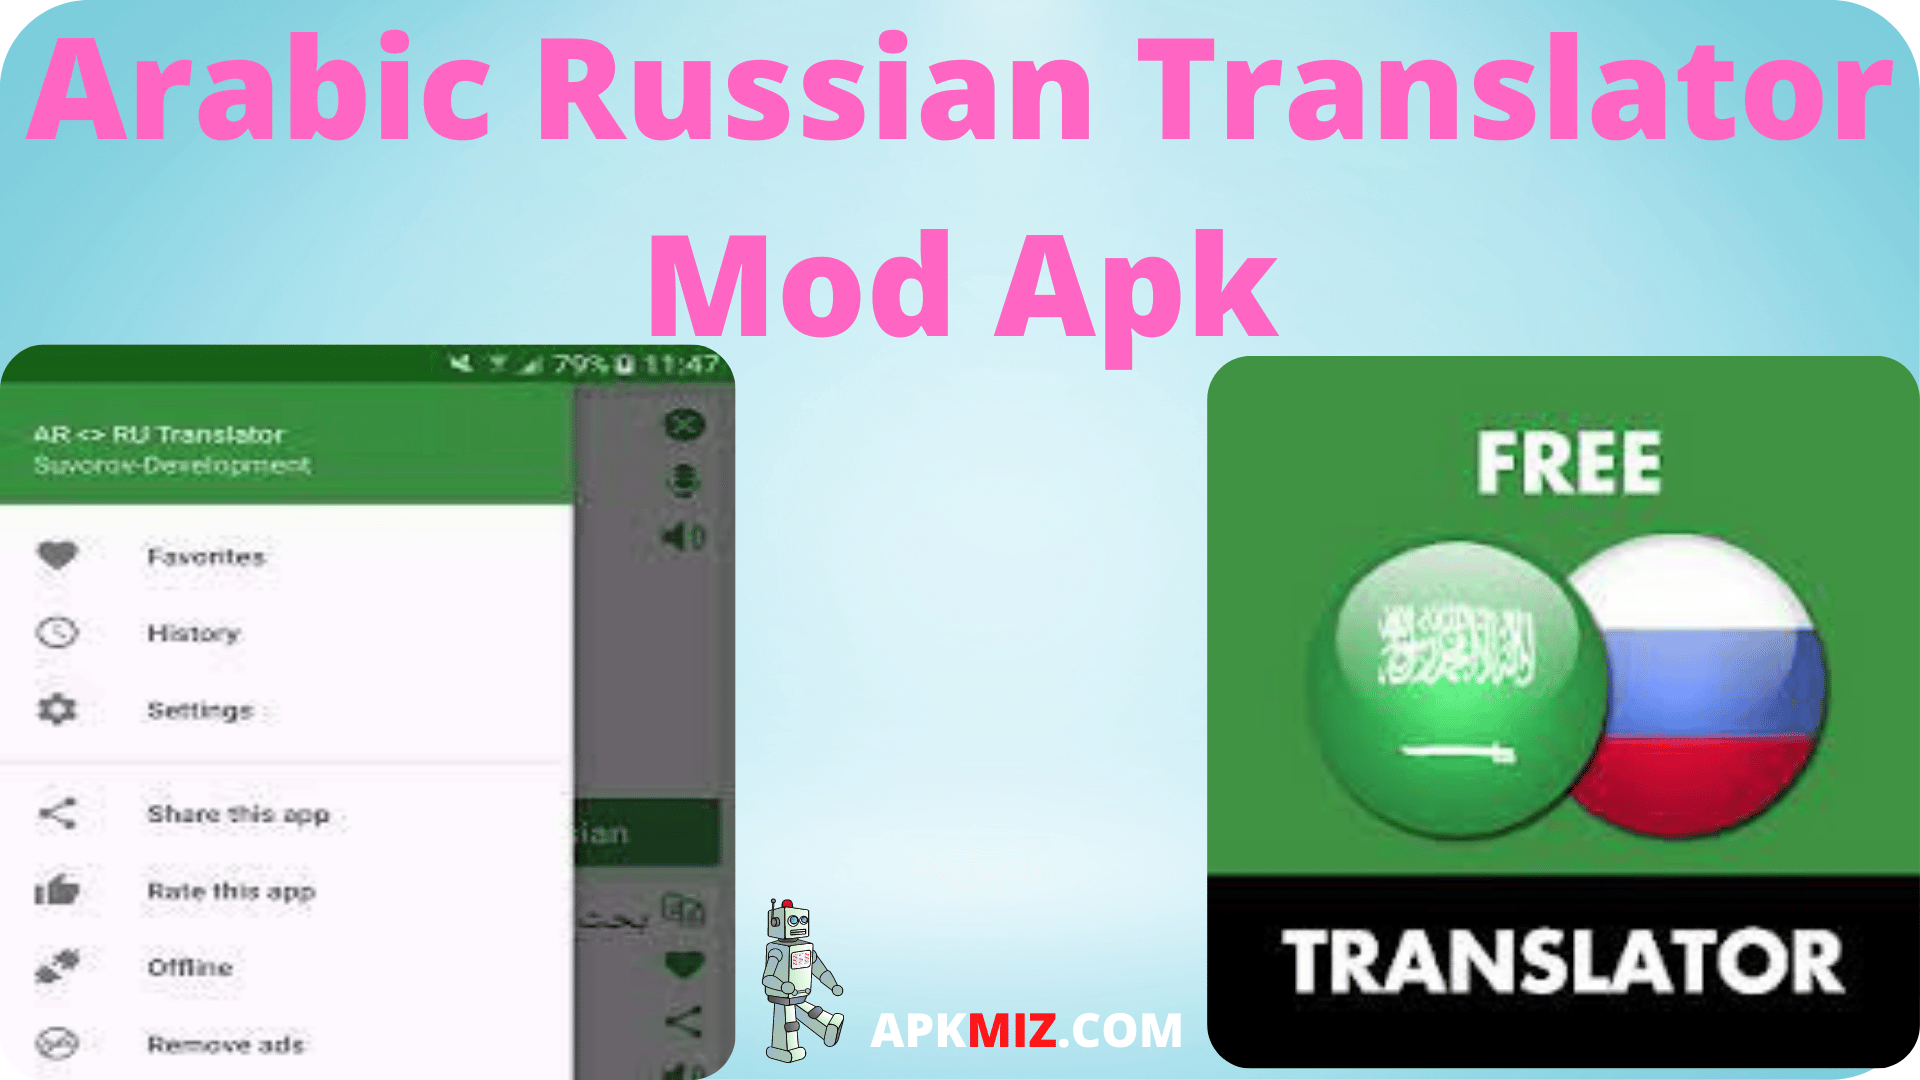 Arabic Russian Translator Mod Apk